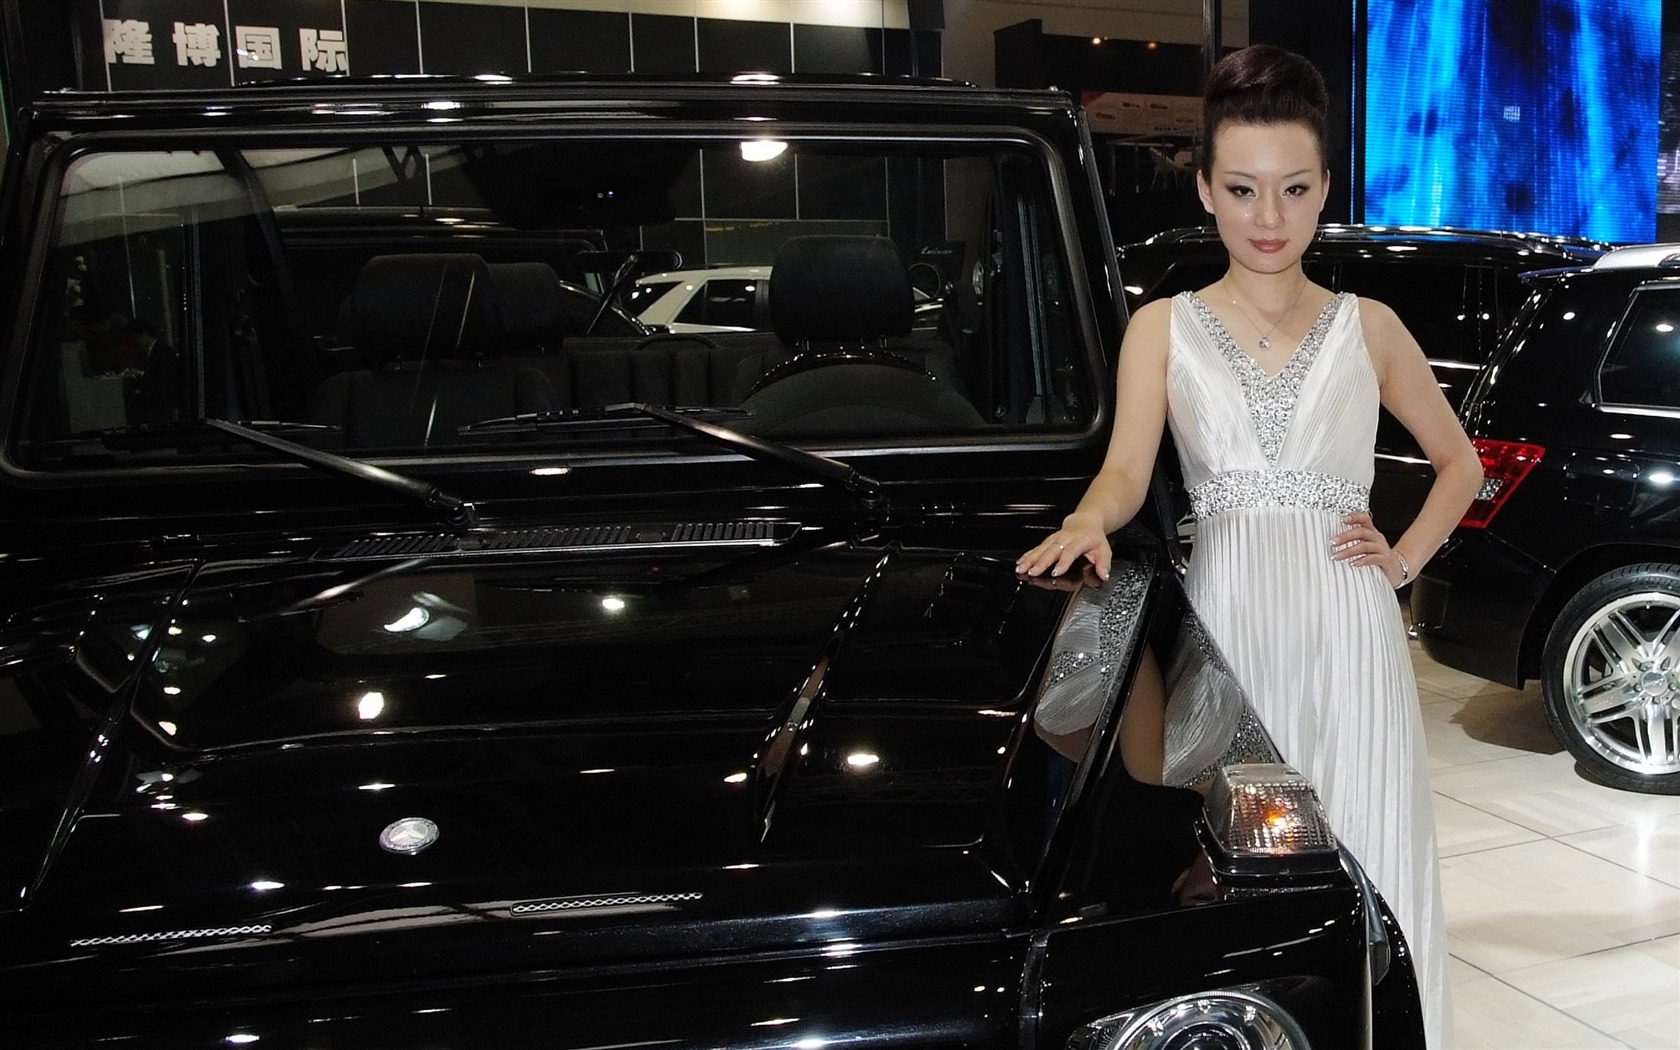 2010 Salón Internacional del Automóvil de Beijing Heung Che belleza (obras barras de refuerzo) #7 - 1680x1050